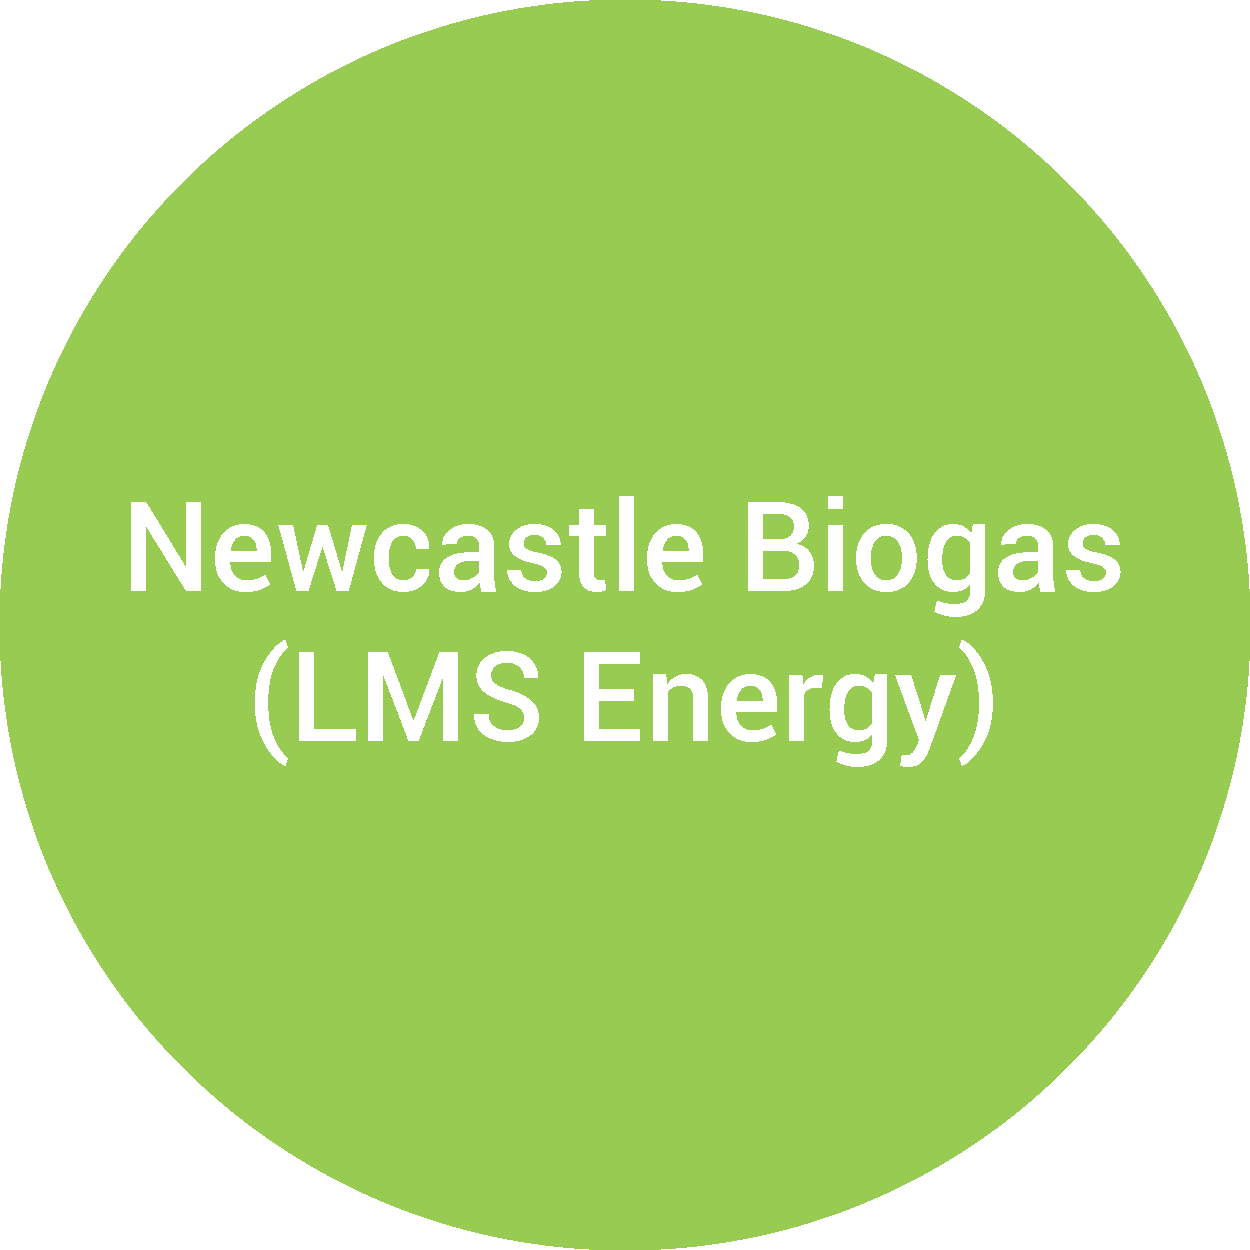 Newcastle Biogas (LMS Energy)